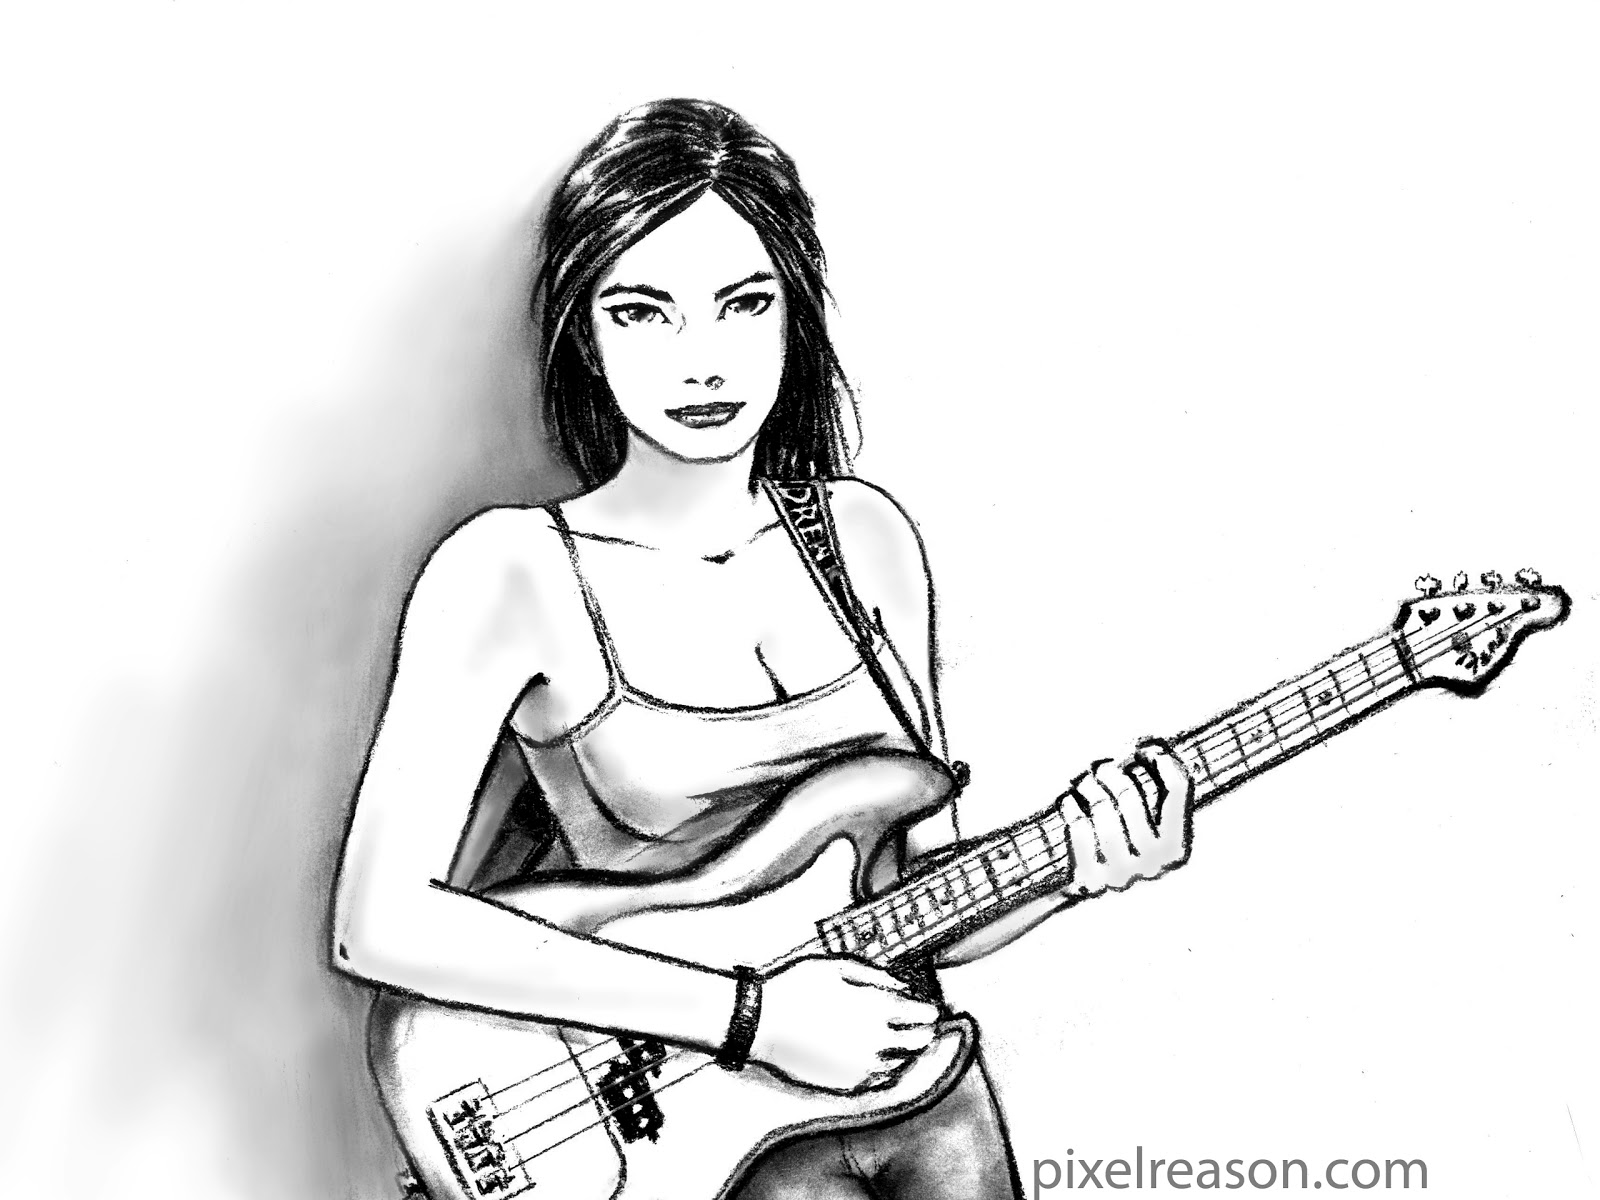 Pixelreasoncom Girl Playing Bass Guitar Pencil Sketch